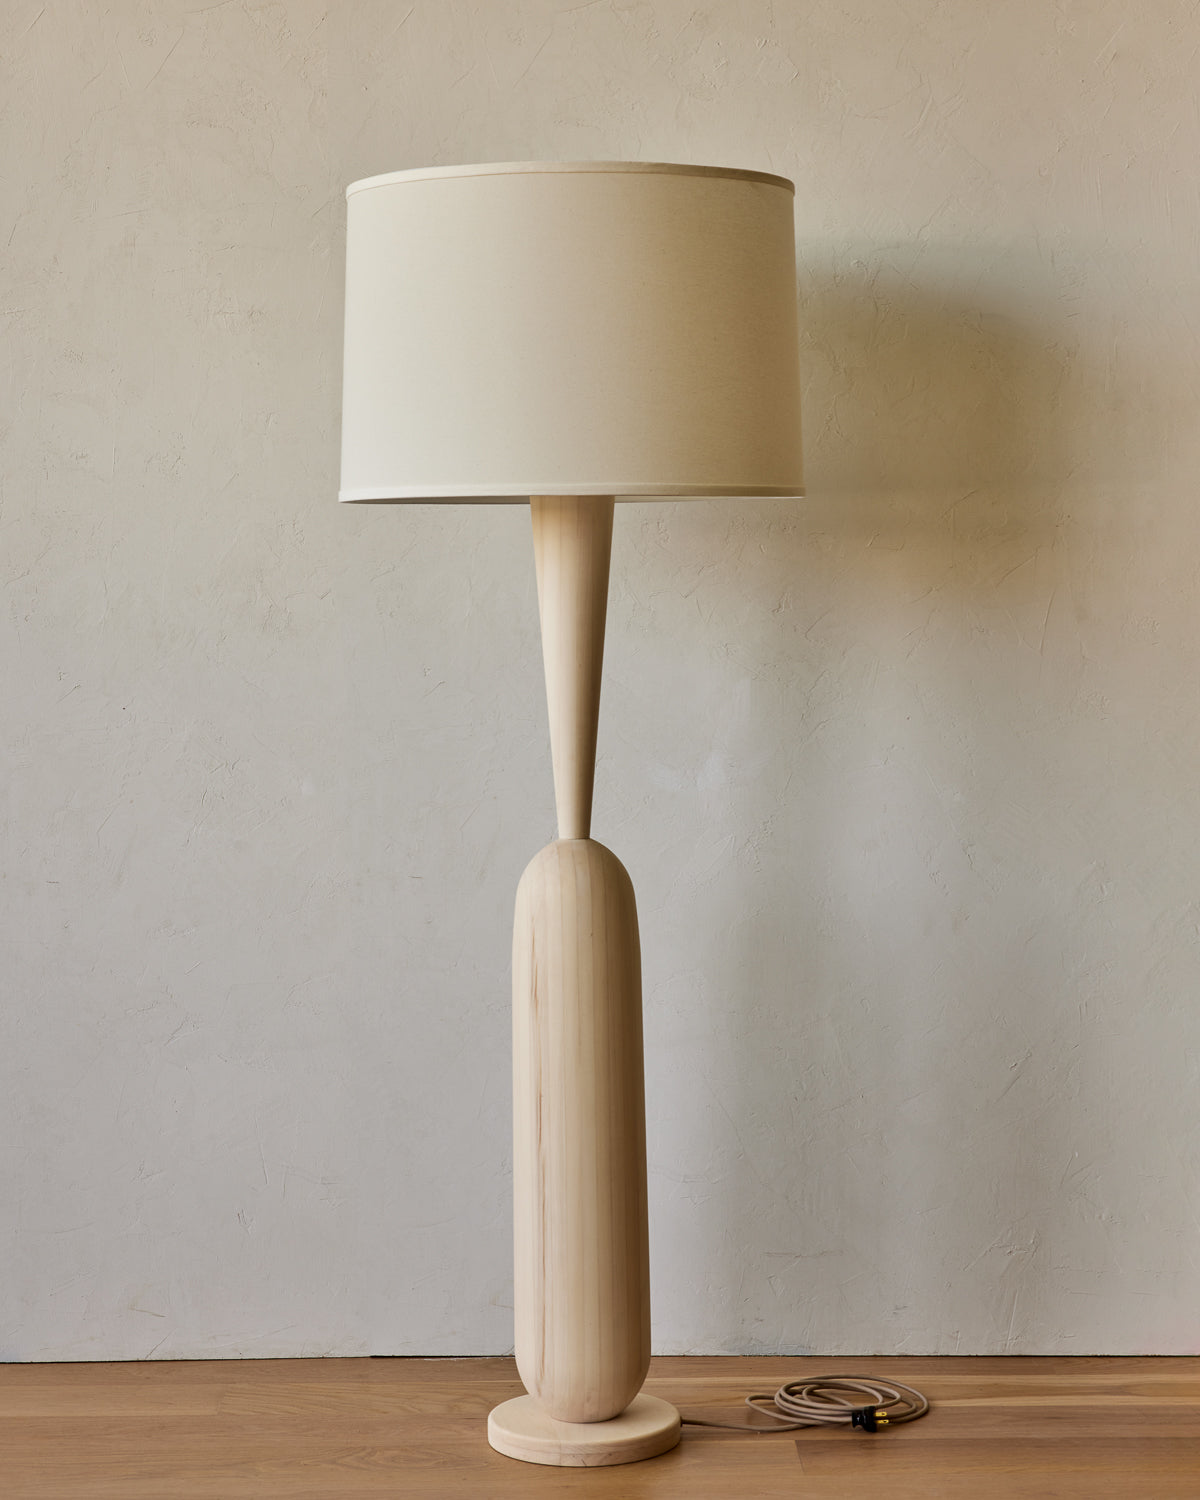 Onslow Floor Lamp